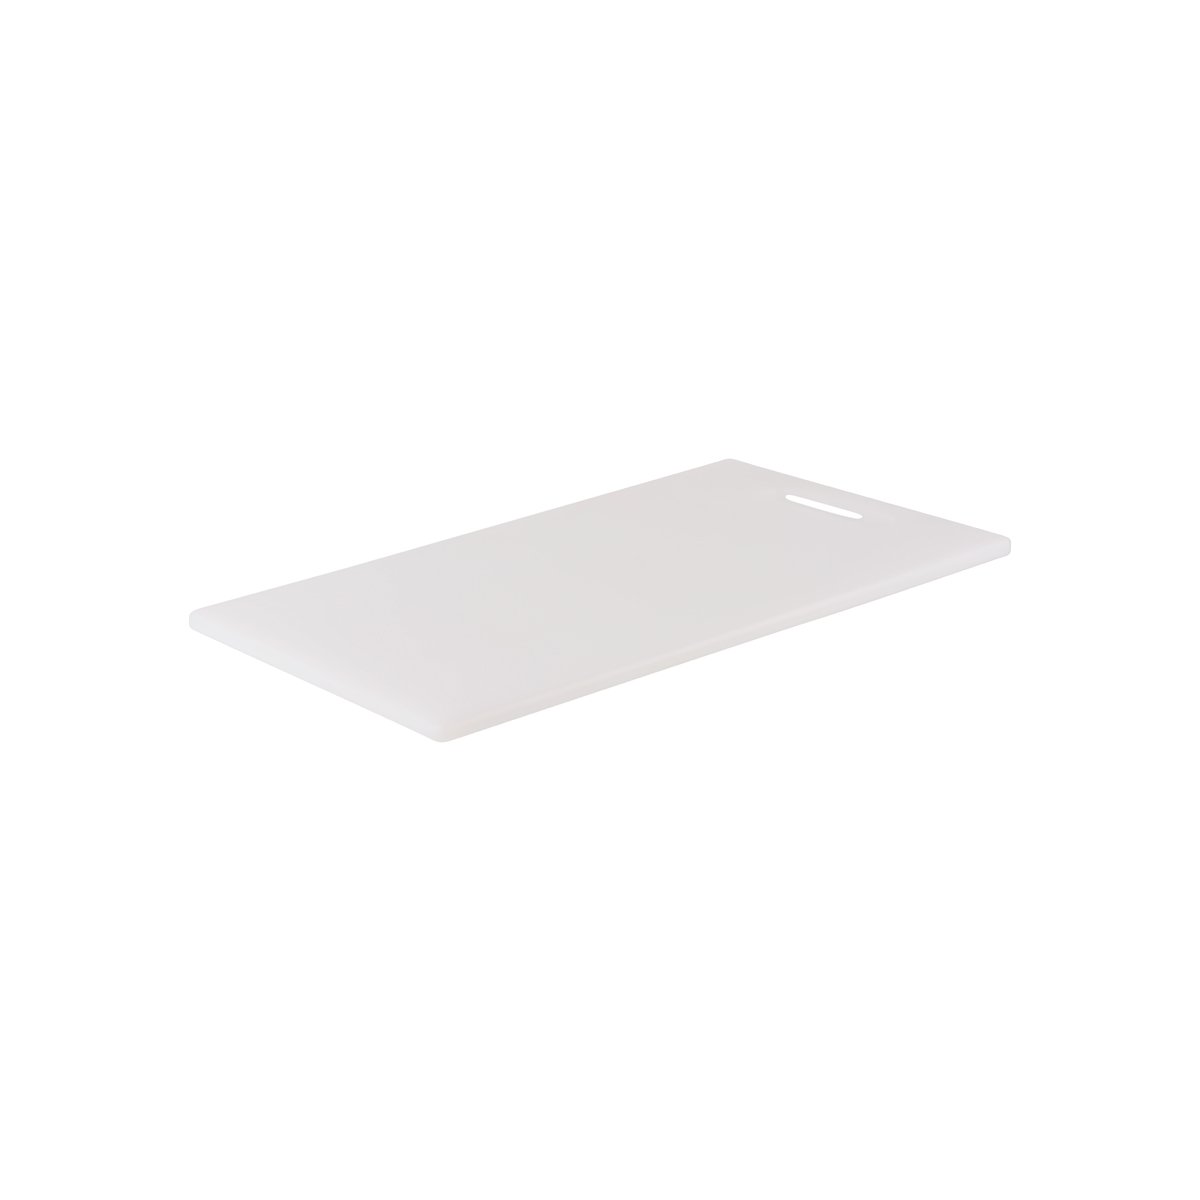 04320 Chef Inox Cutting Board Polyethylene White with Handle 300x450x12mm Tomkin Australia Hospitality Supplies